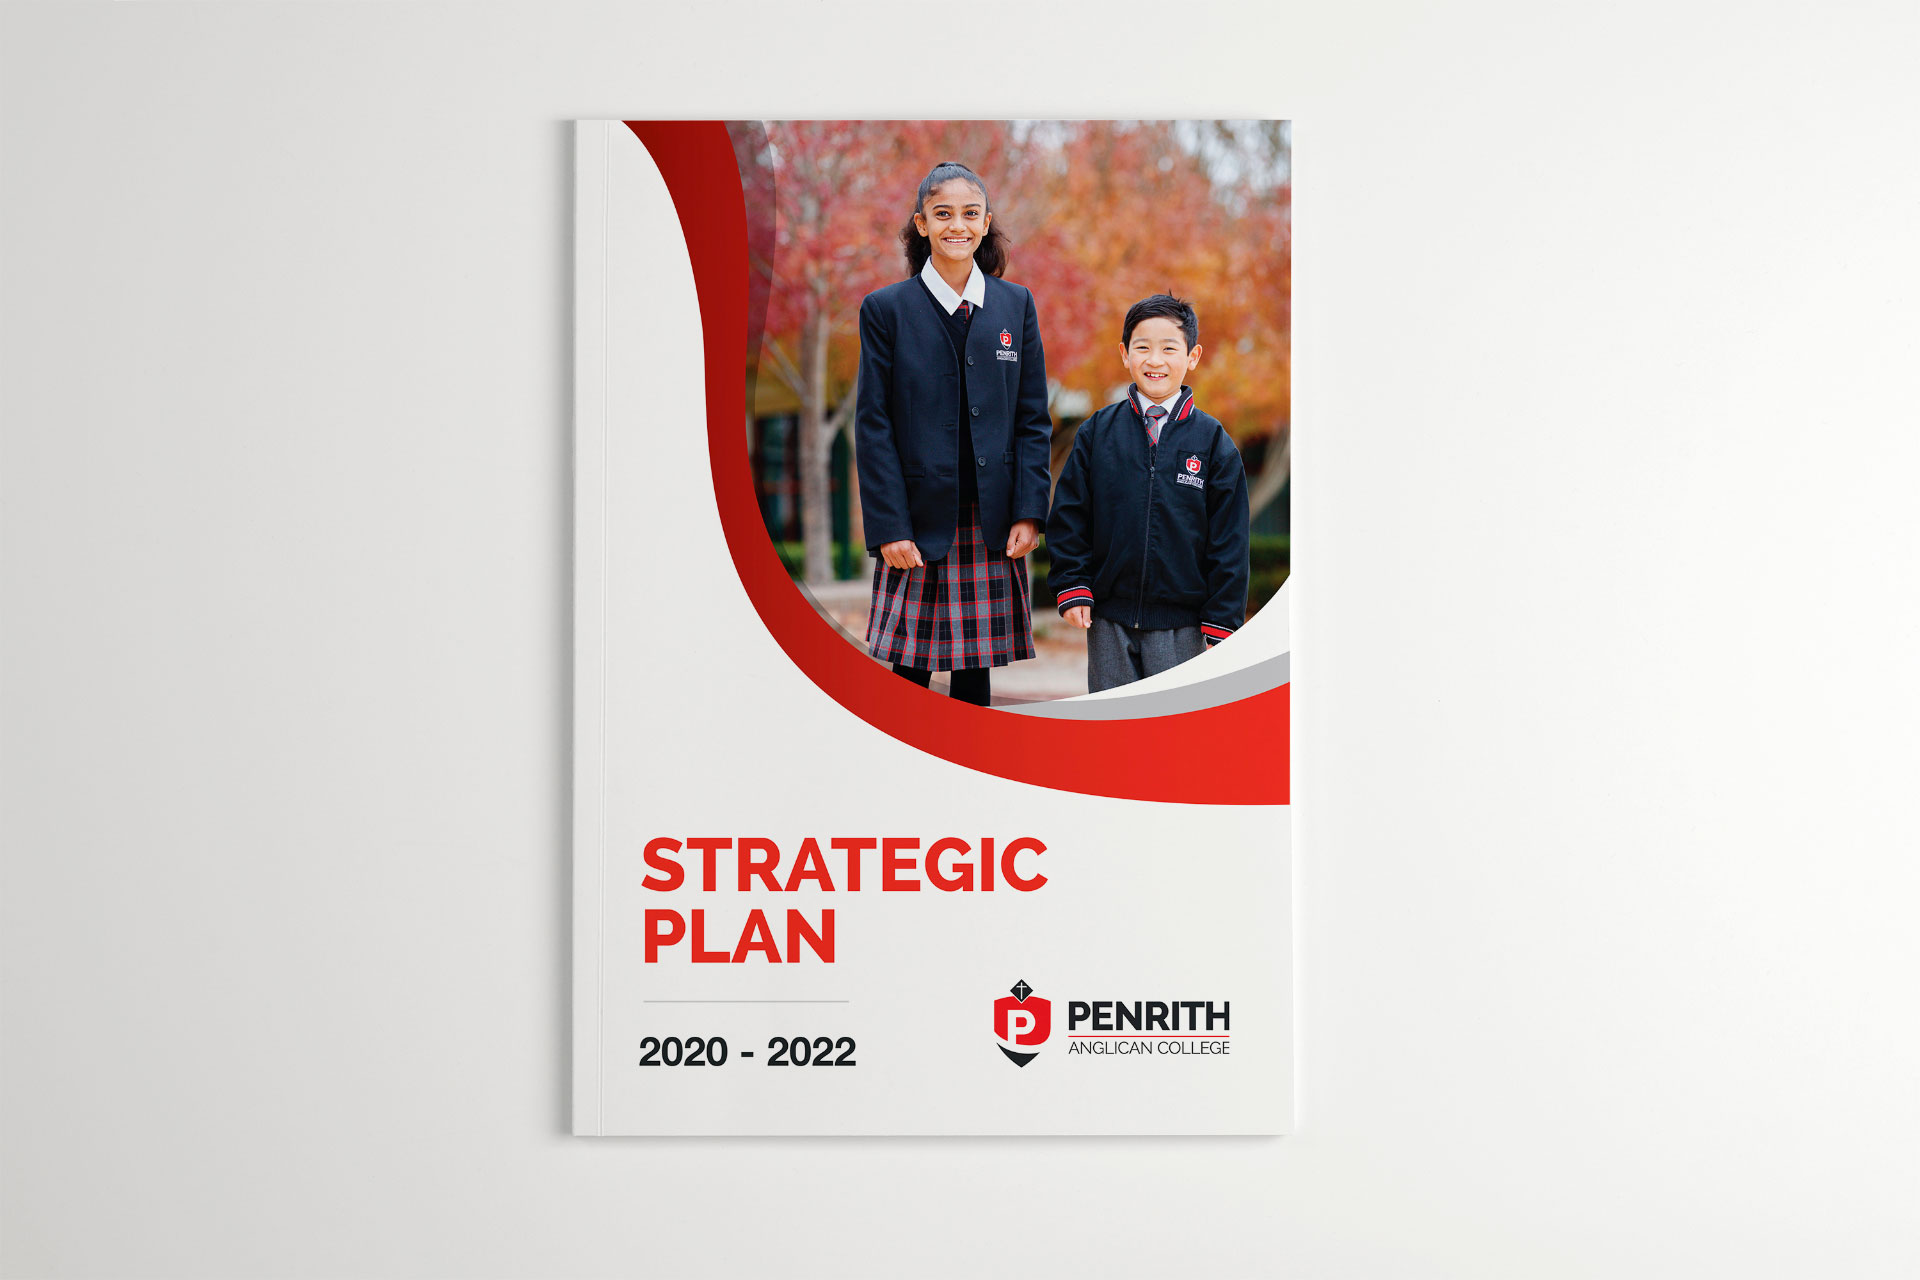 Penrith Anglican College strategic plan